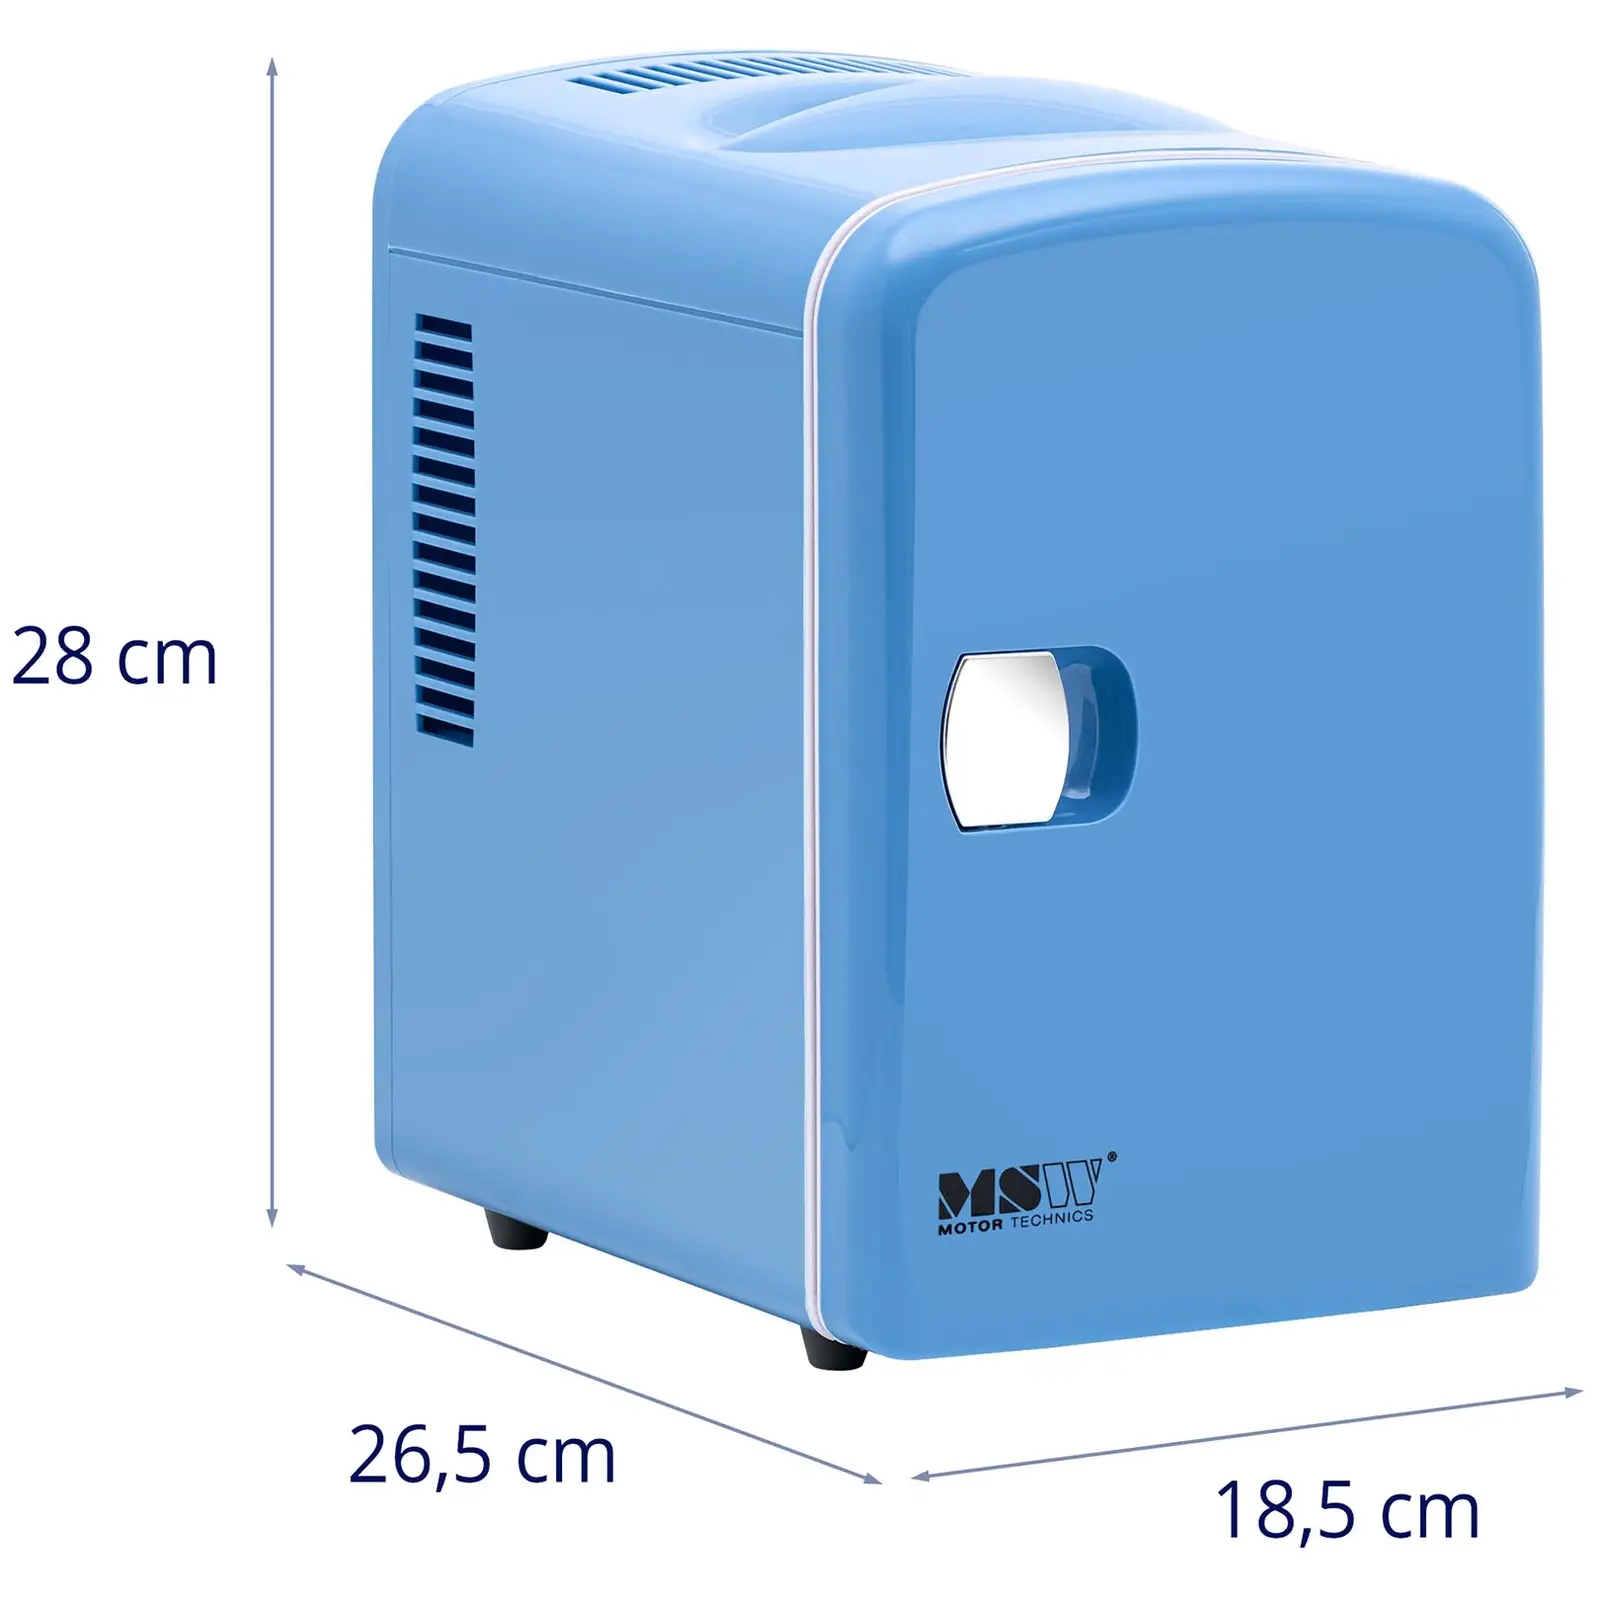 Mini-Kühlschrank 12 V / 230 V - 2-in-1-Gerät mit Warmhaltefunktion - 4 L - Blau - 7